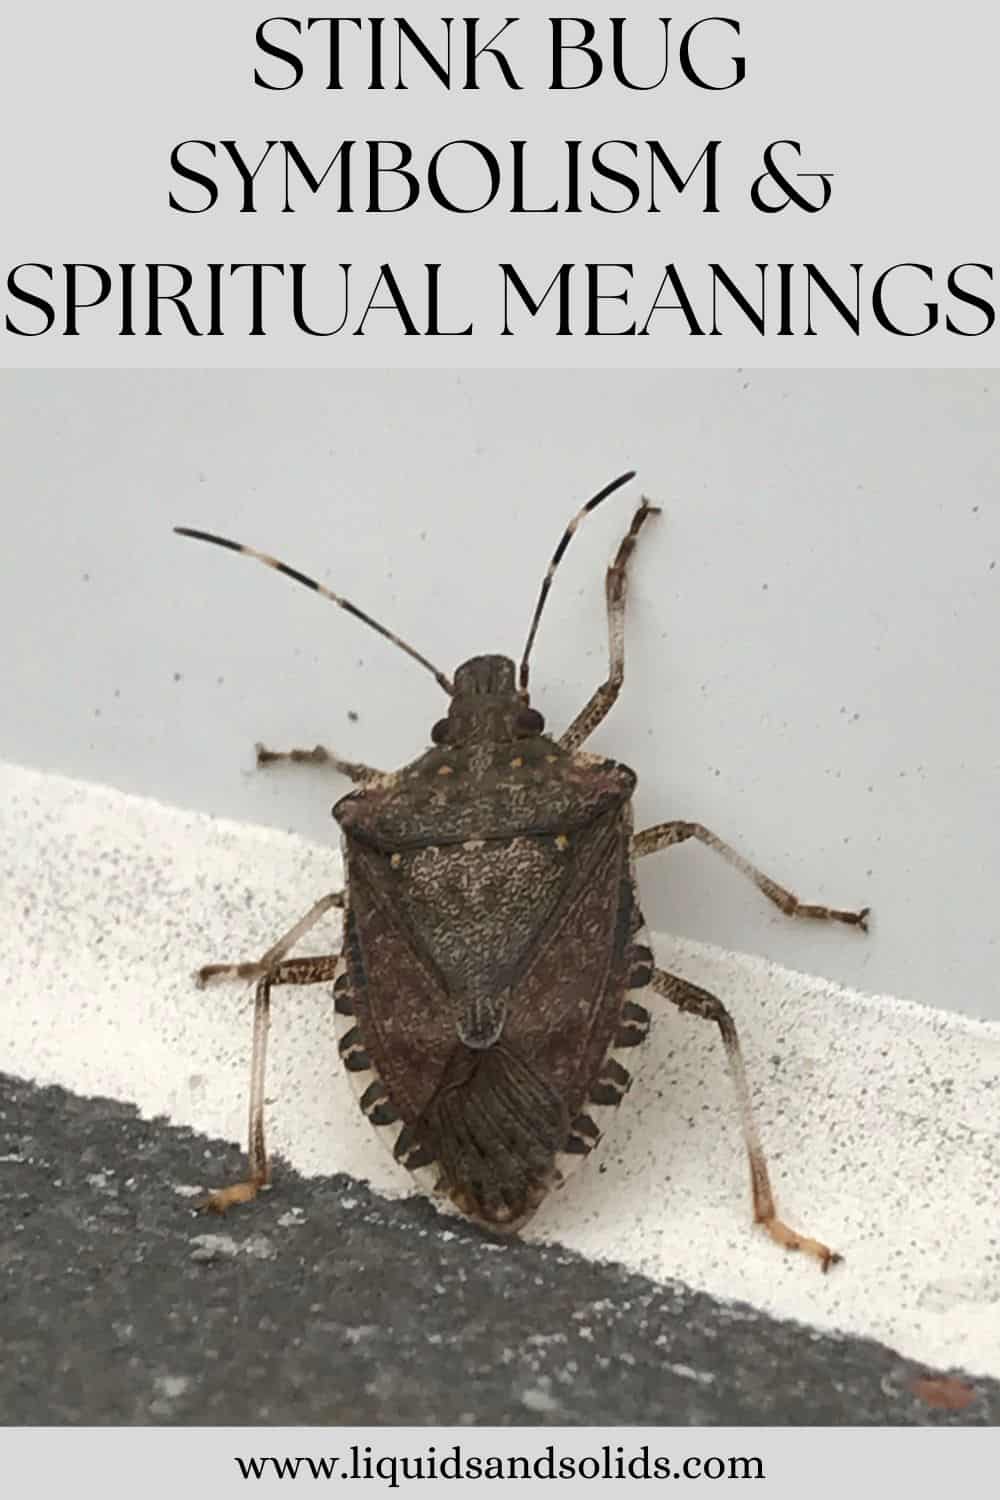  Stink Bug Symbolism &amp; სულიერი მნიშვნელობები